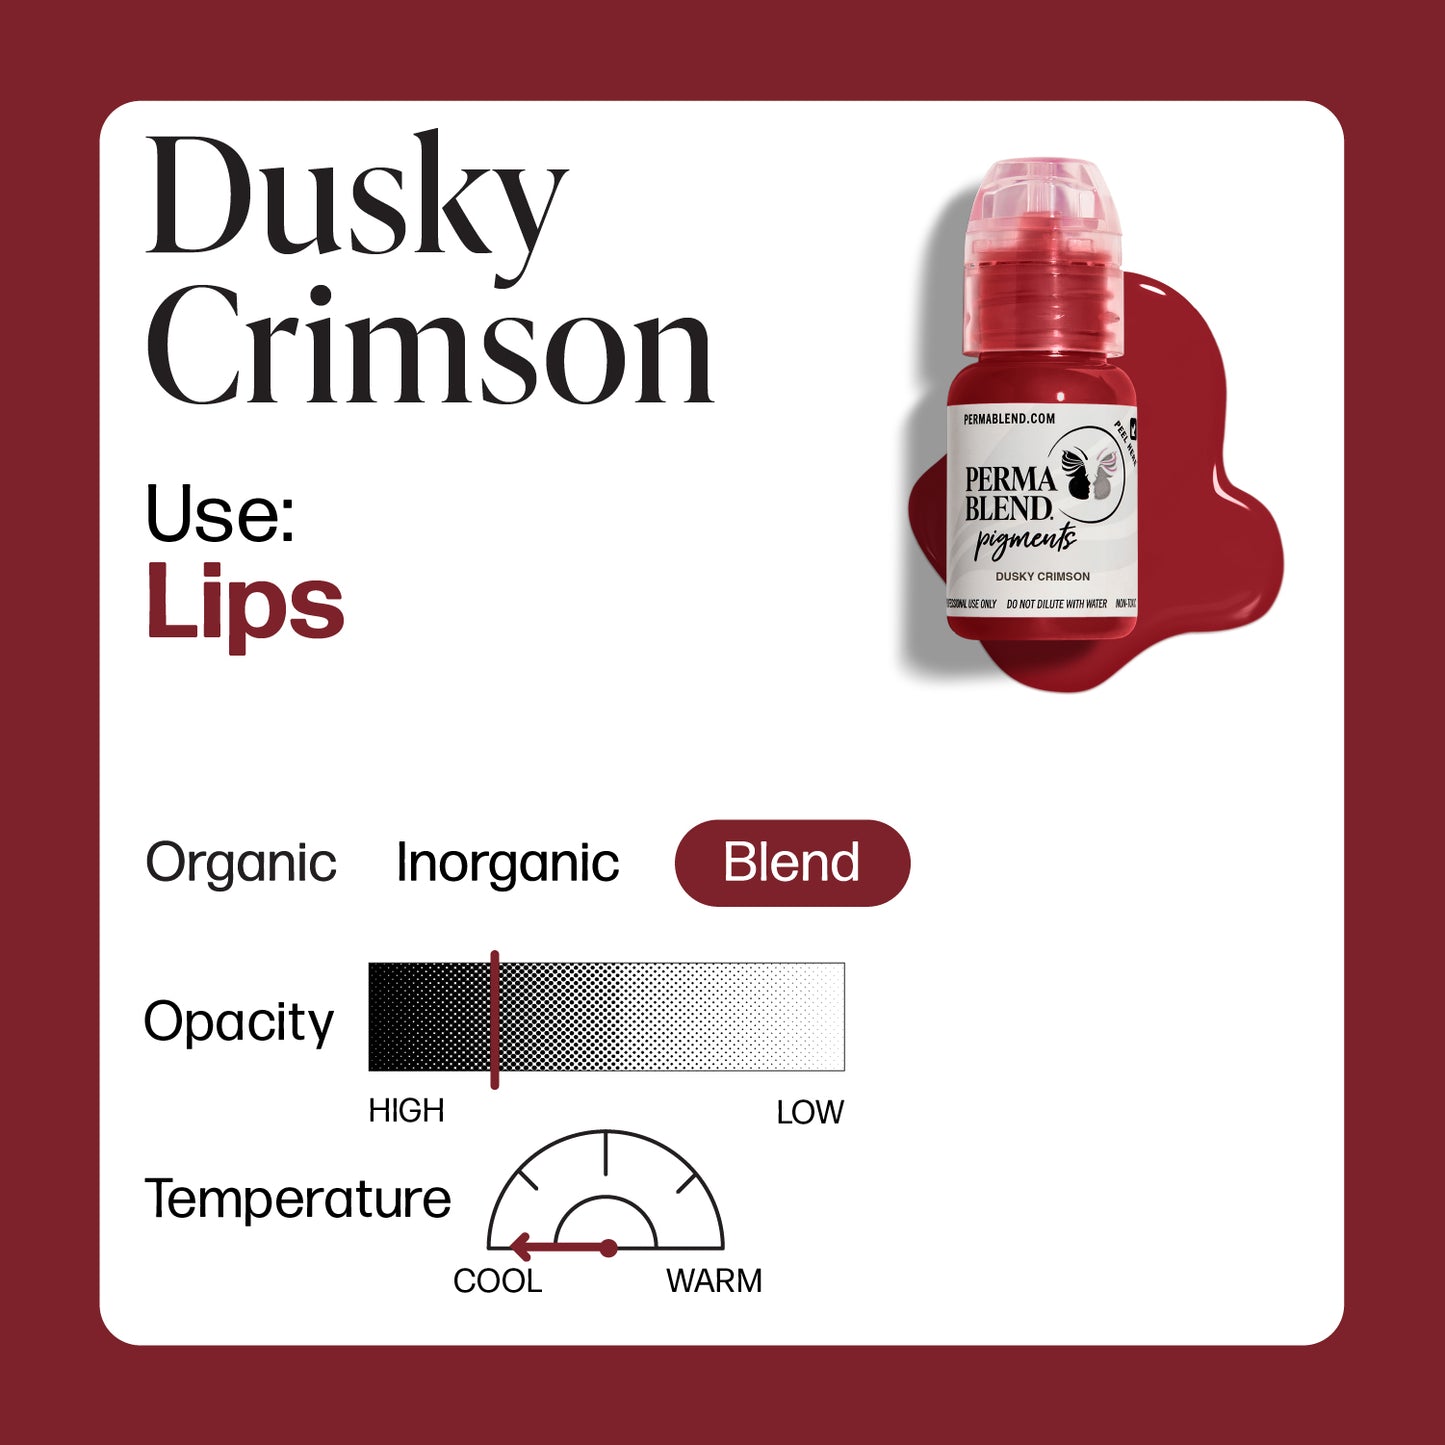 Dusky Crimson